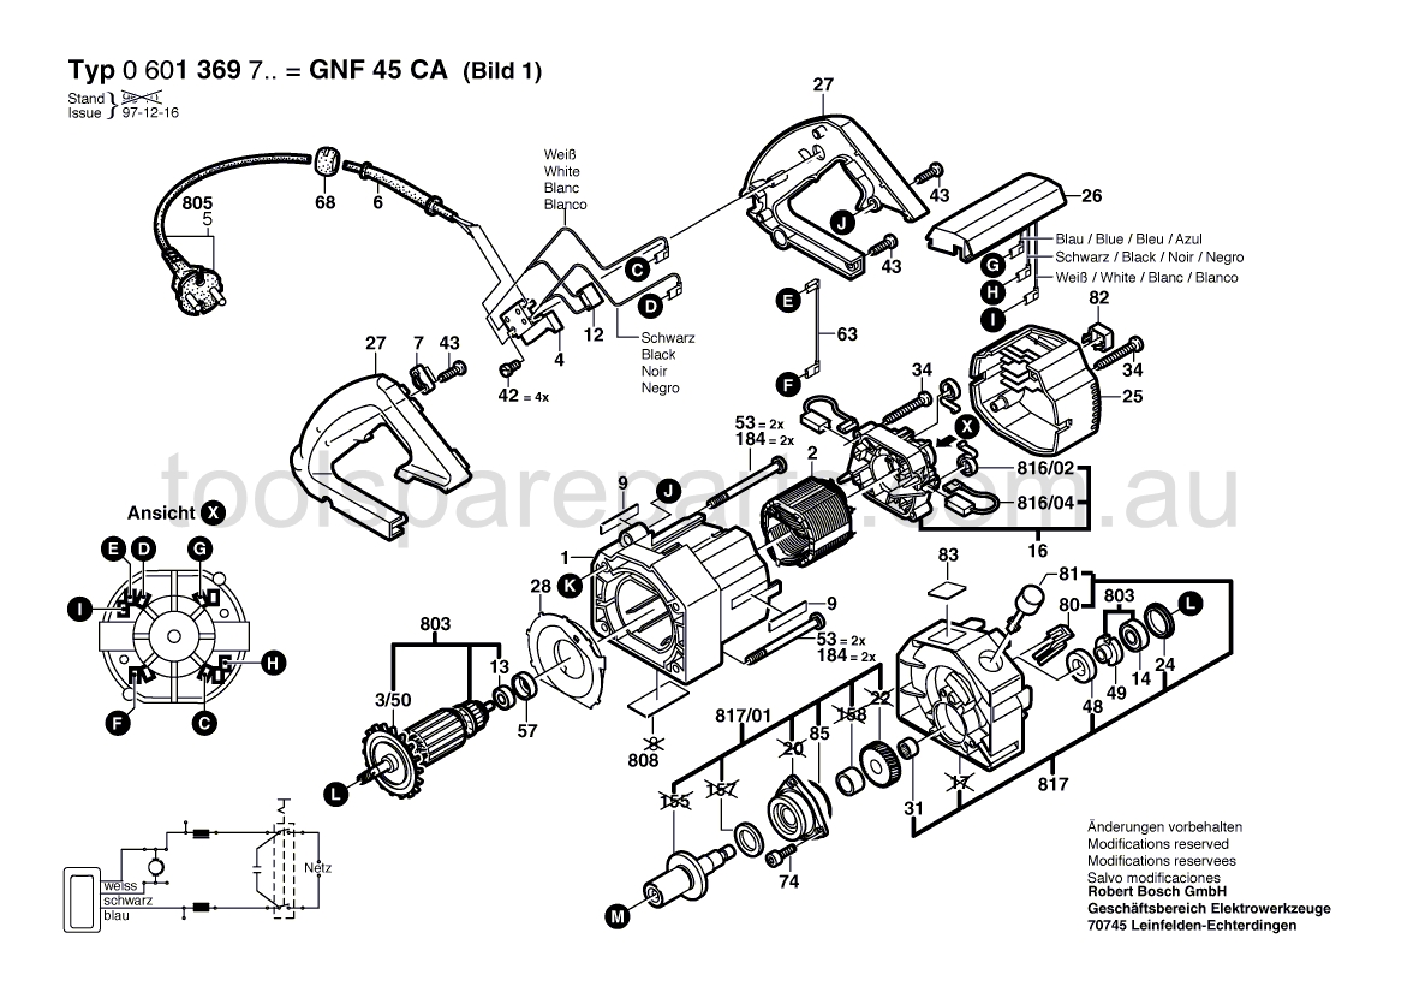 Bosch GNF 45 CA 0601369737  Diagram 1